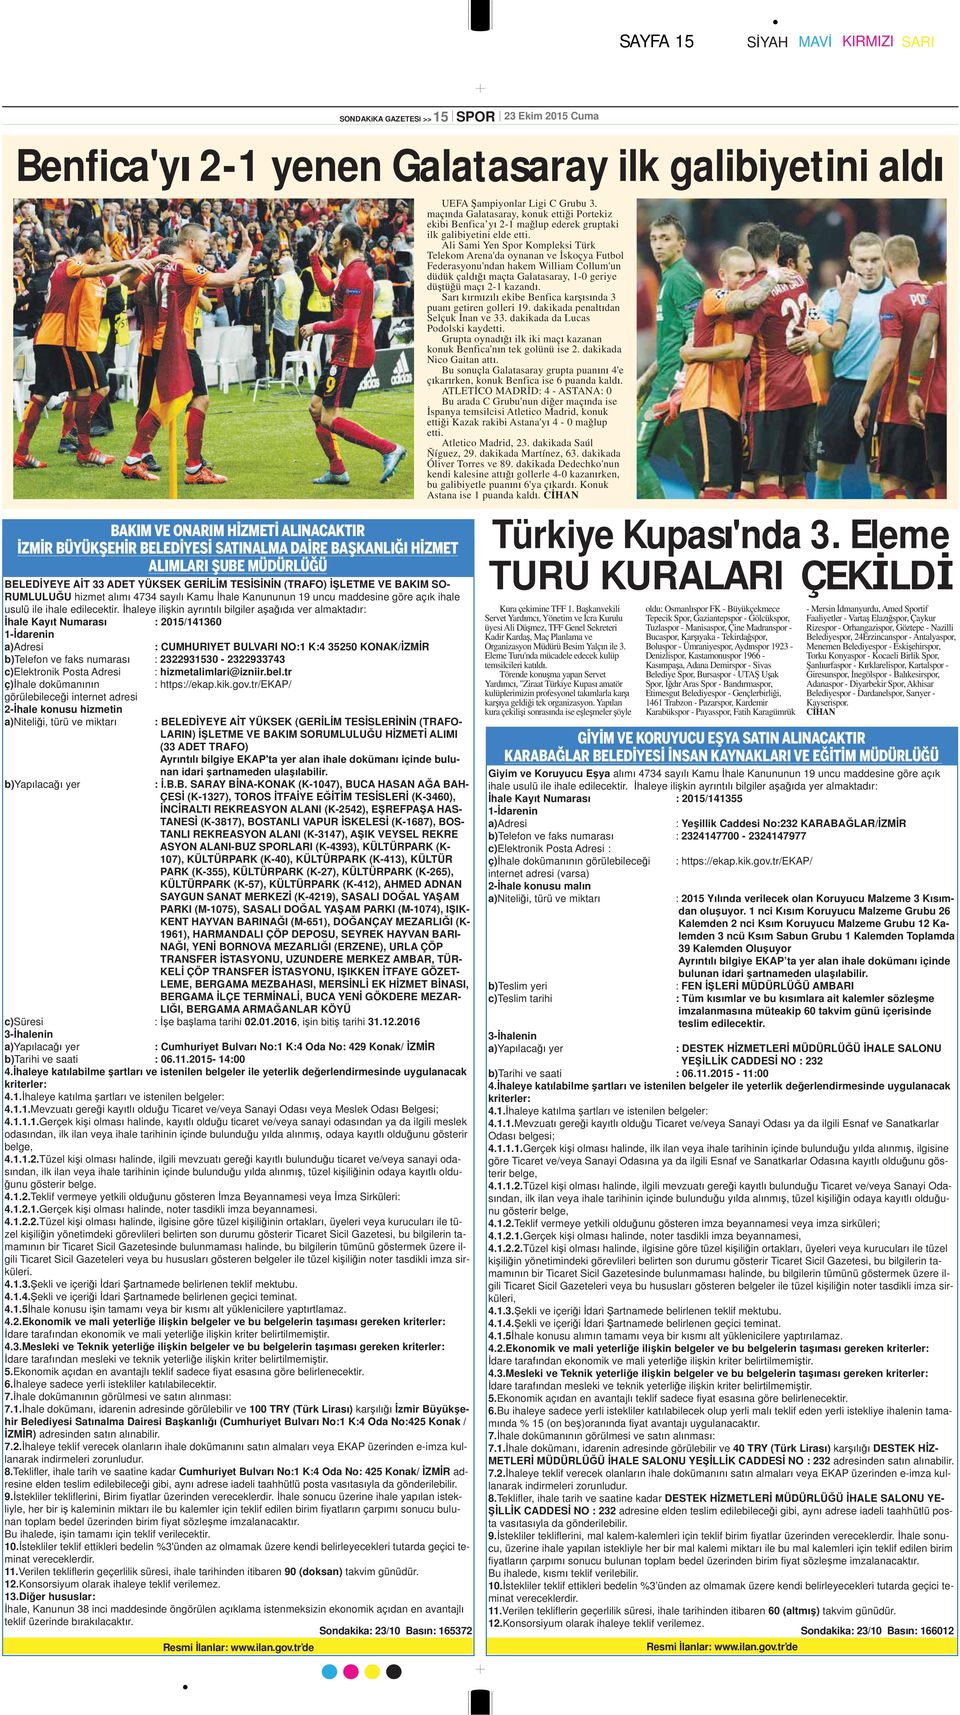 Ali Sami Y Spor Komplksi Türk Tlkom Ara'da oyaa v skoçya Futbol Fdrasyou'da hakm William Collum'u düdük çald maçta Galatasaray, 1-0 griy dü tü ü maç 2-1 kazad.